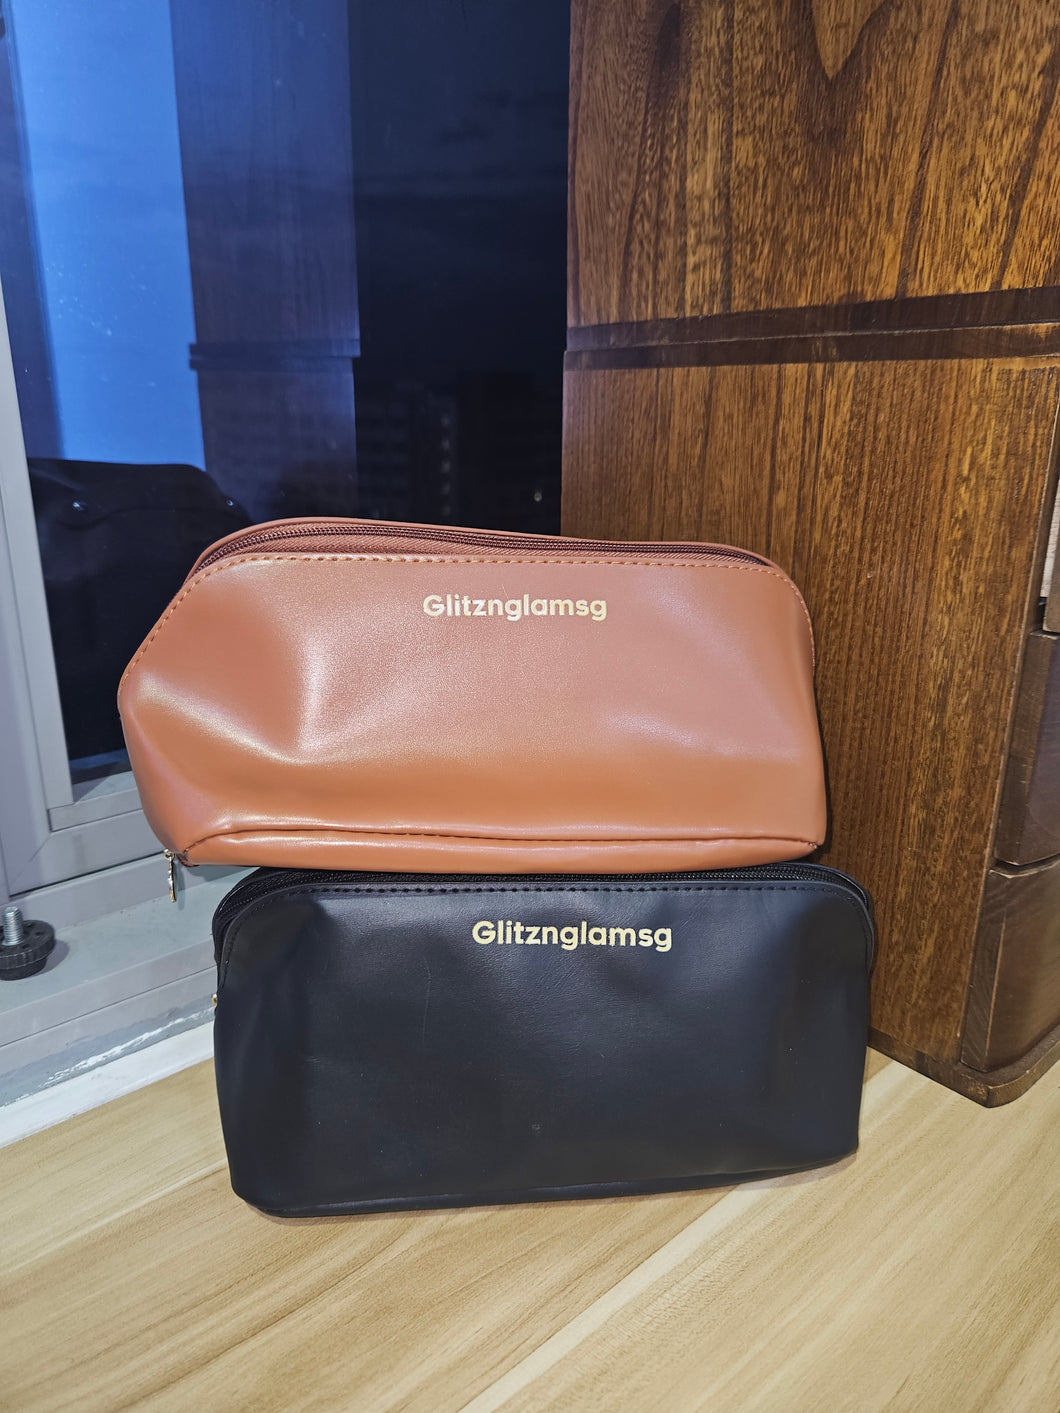 Glitznglamsg travel pouch/case